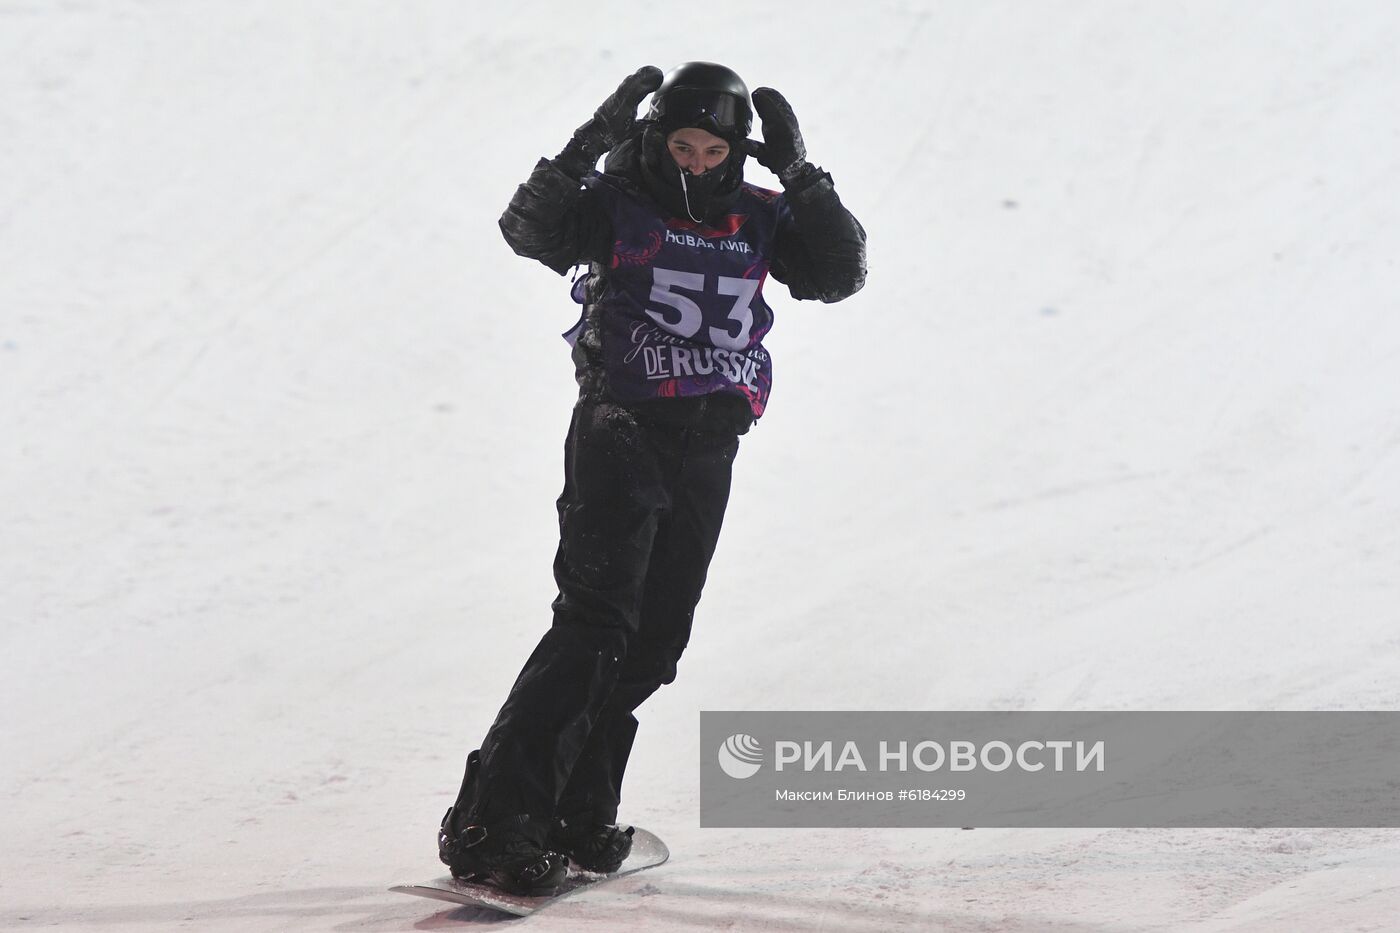 Сноуборд. Мировой тур Grand Prix de Russie 2020